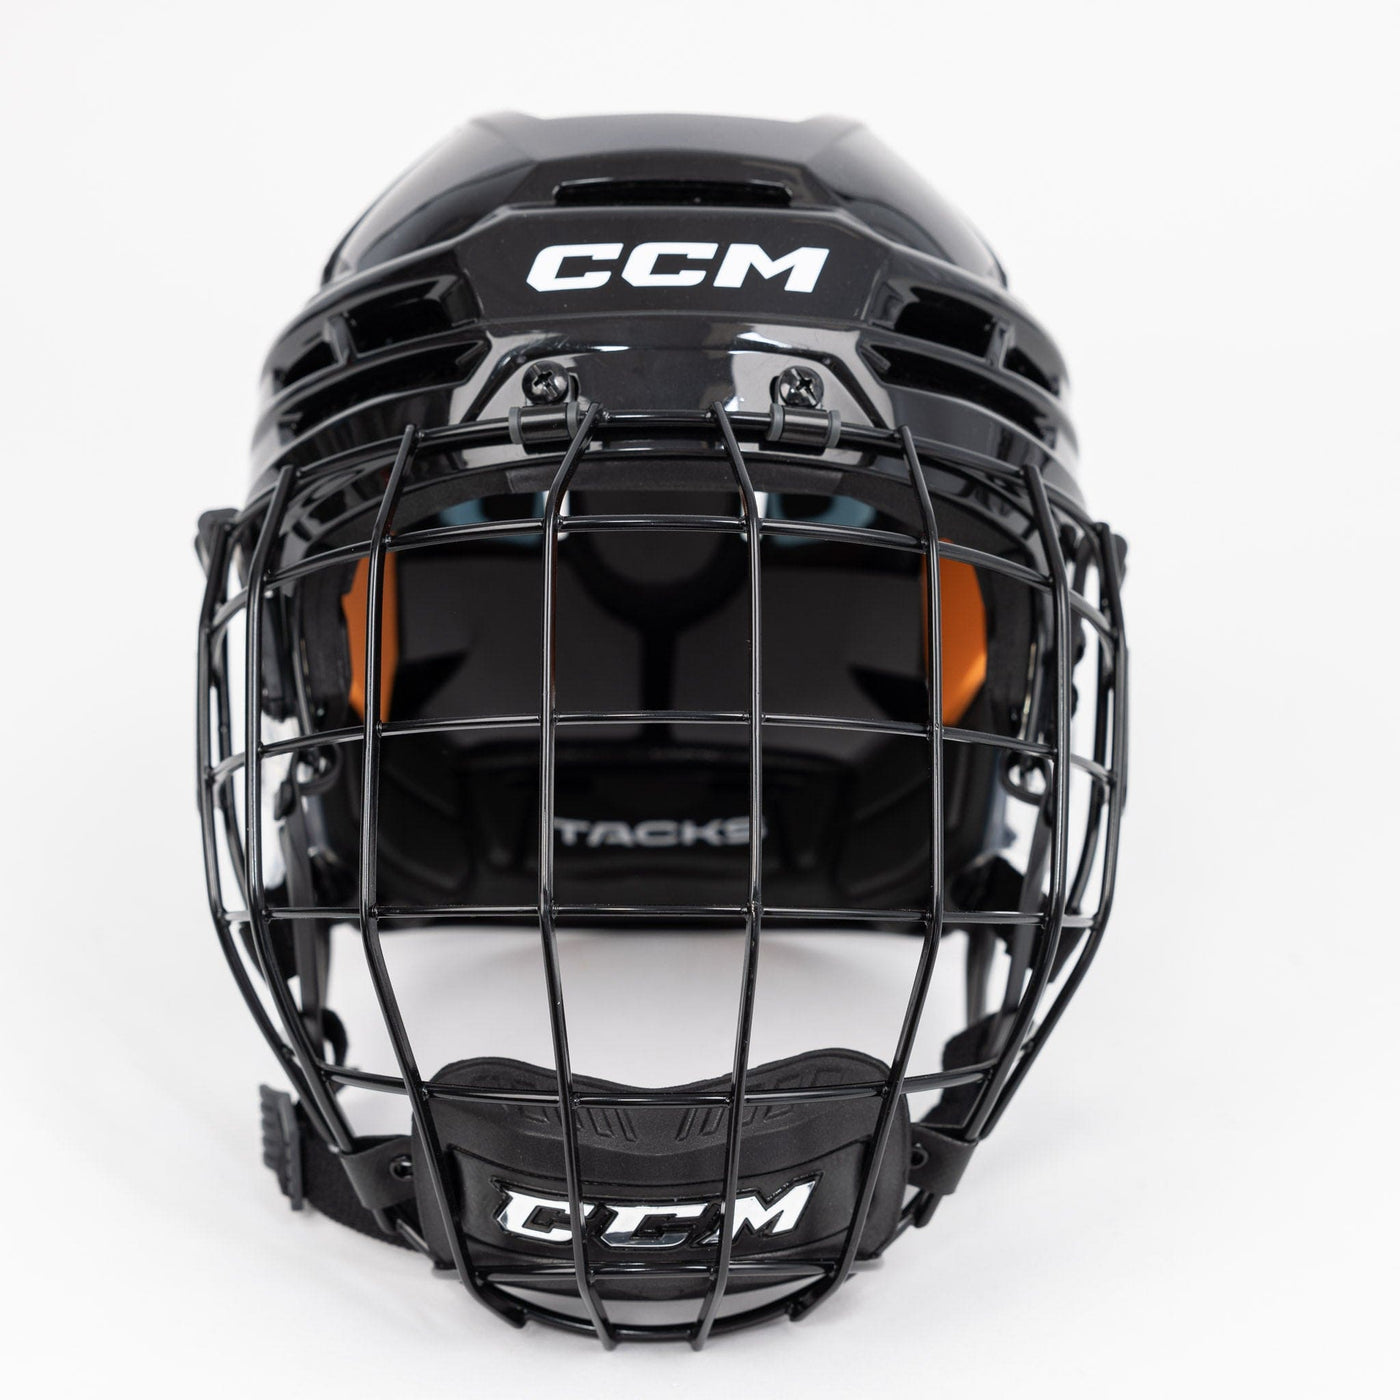 CCM Tacks 720 Hockey Helmet / Cage Combo - The Hockey Shop Source For Sports